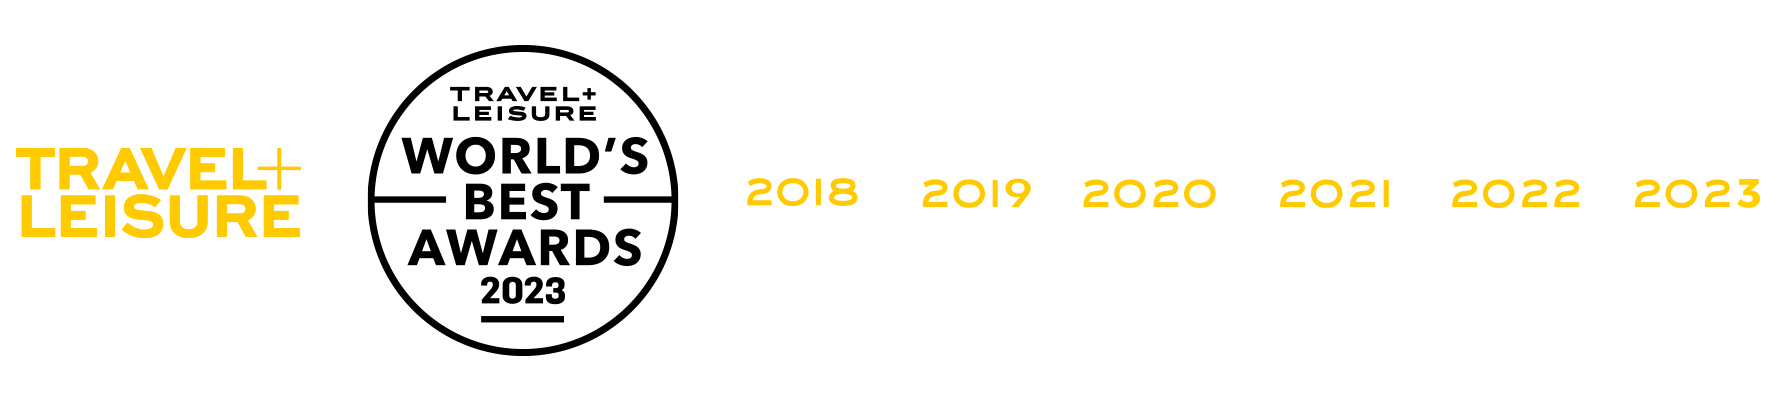 Travel+Leisure World's Best Awards badge showing 2018, 2019, 2020, 2021, 2022 & 2023